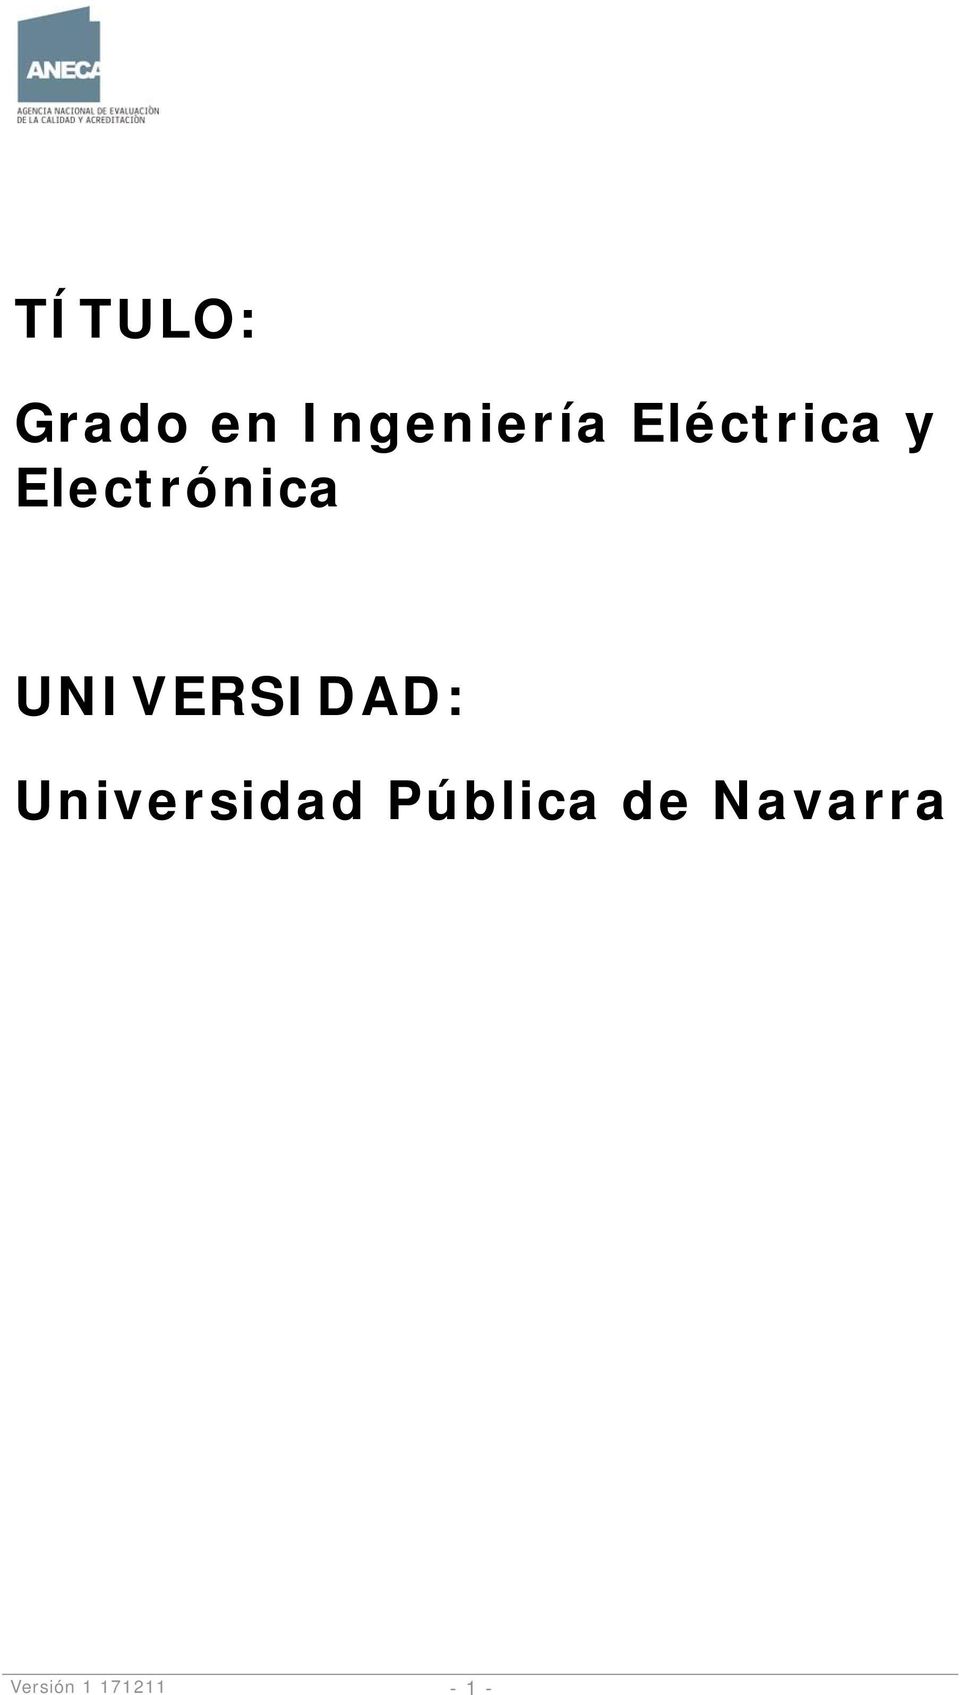 UNIVERSIDAD: Universidad